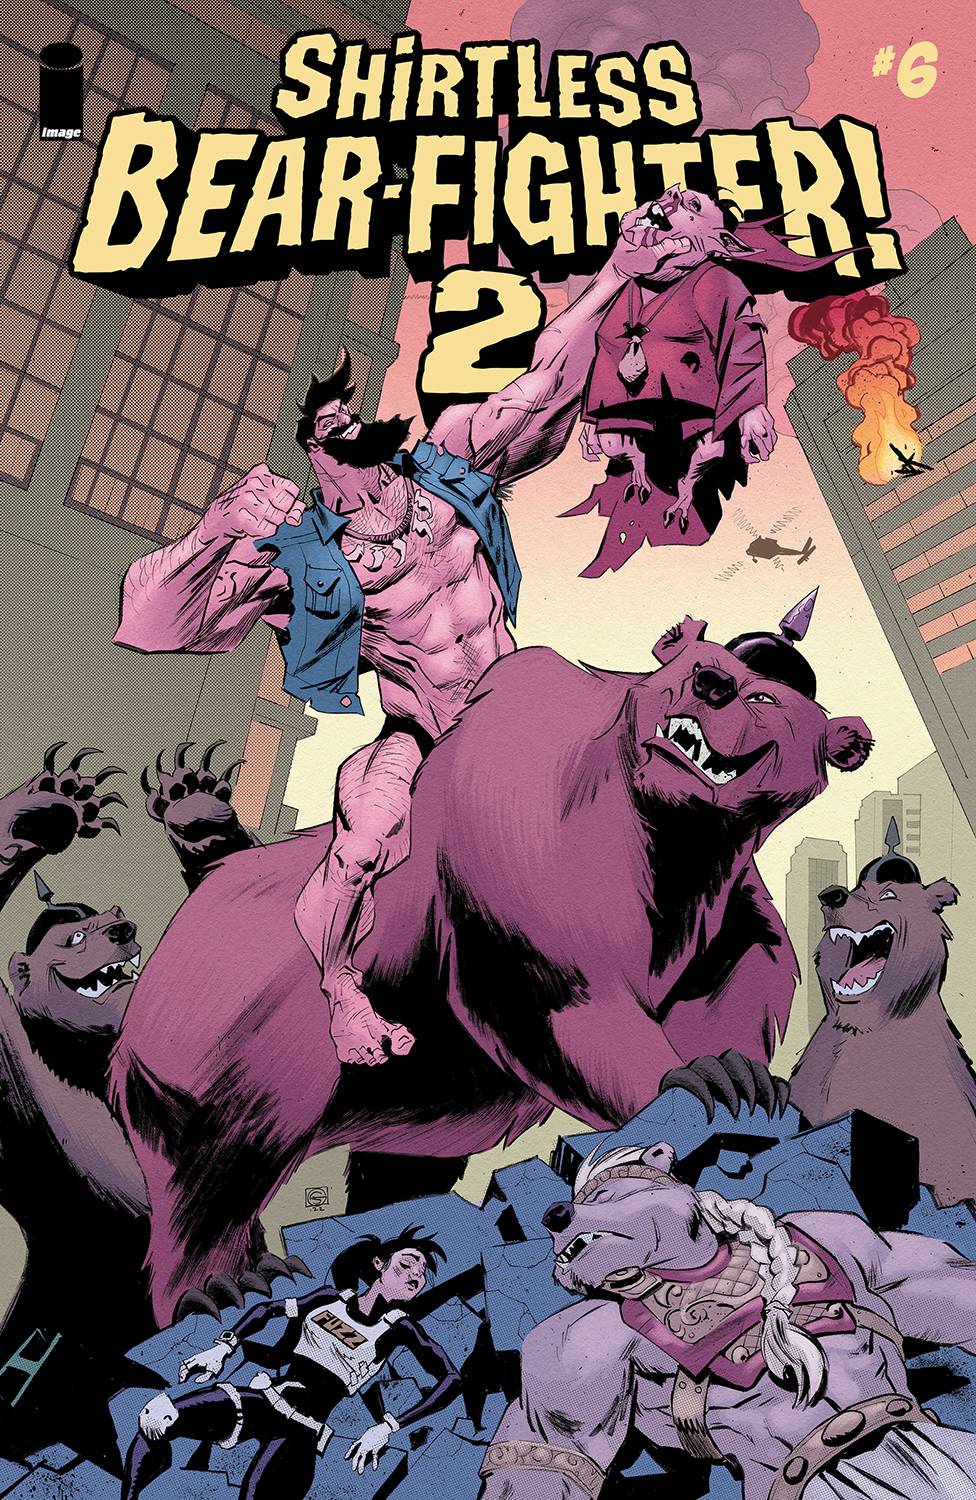 SHIRTLESS BEAR-FIGHTER 2 #6 (OF 7) CVR B GREEN